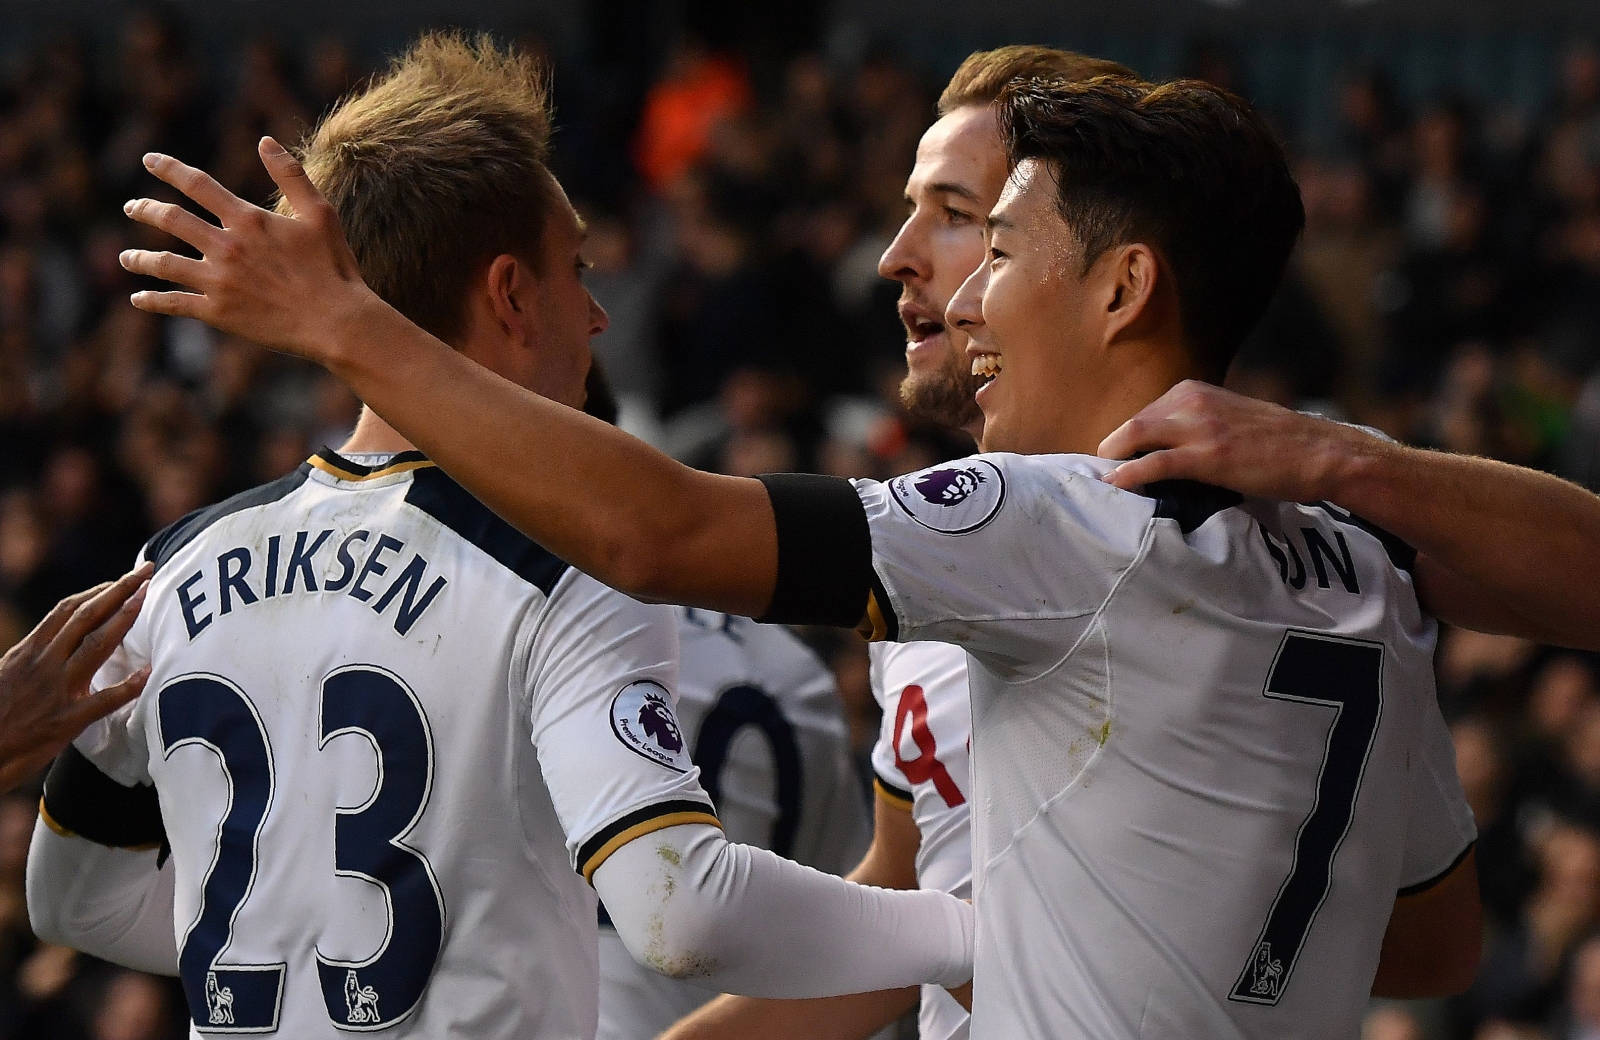 Tottenham Hotspur 5-0 Swansea City: Harry Kane and Christian Eriksen net doubles in rout